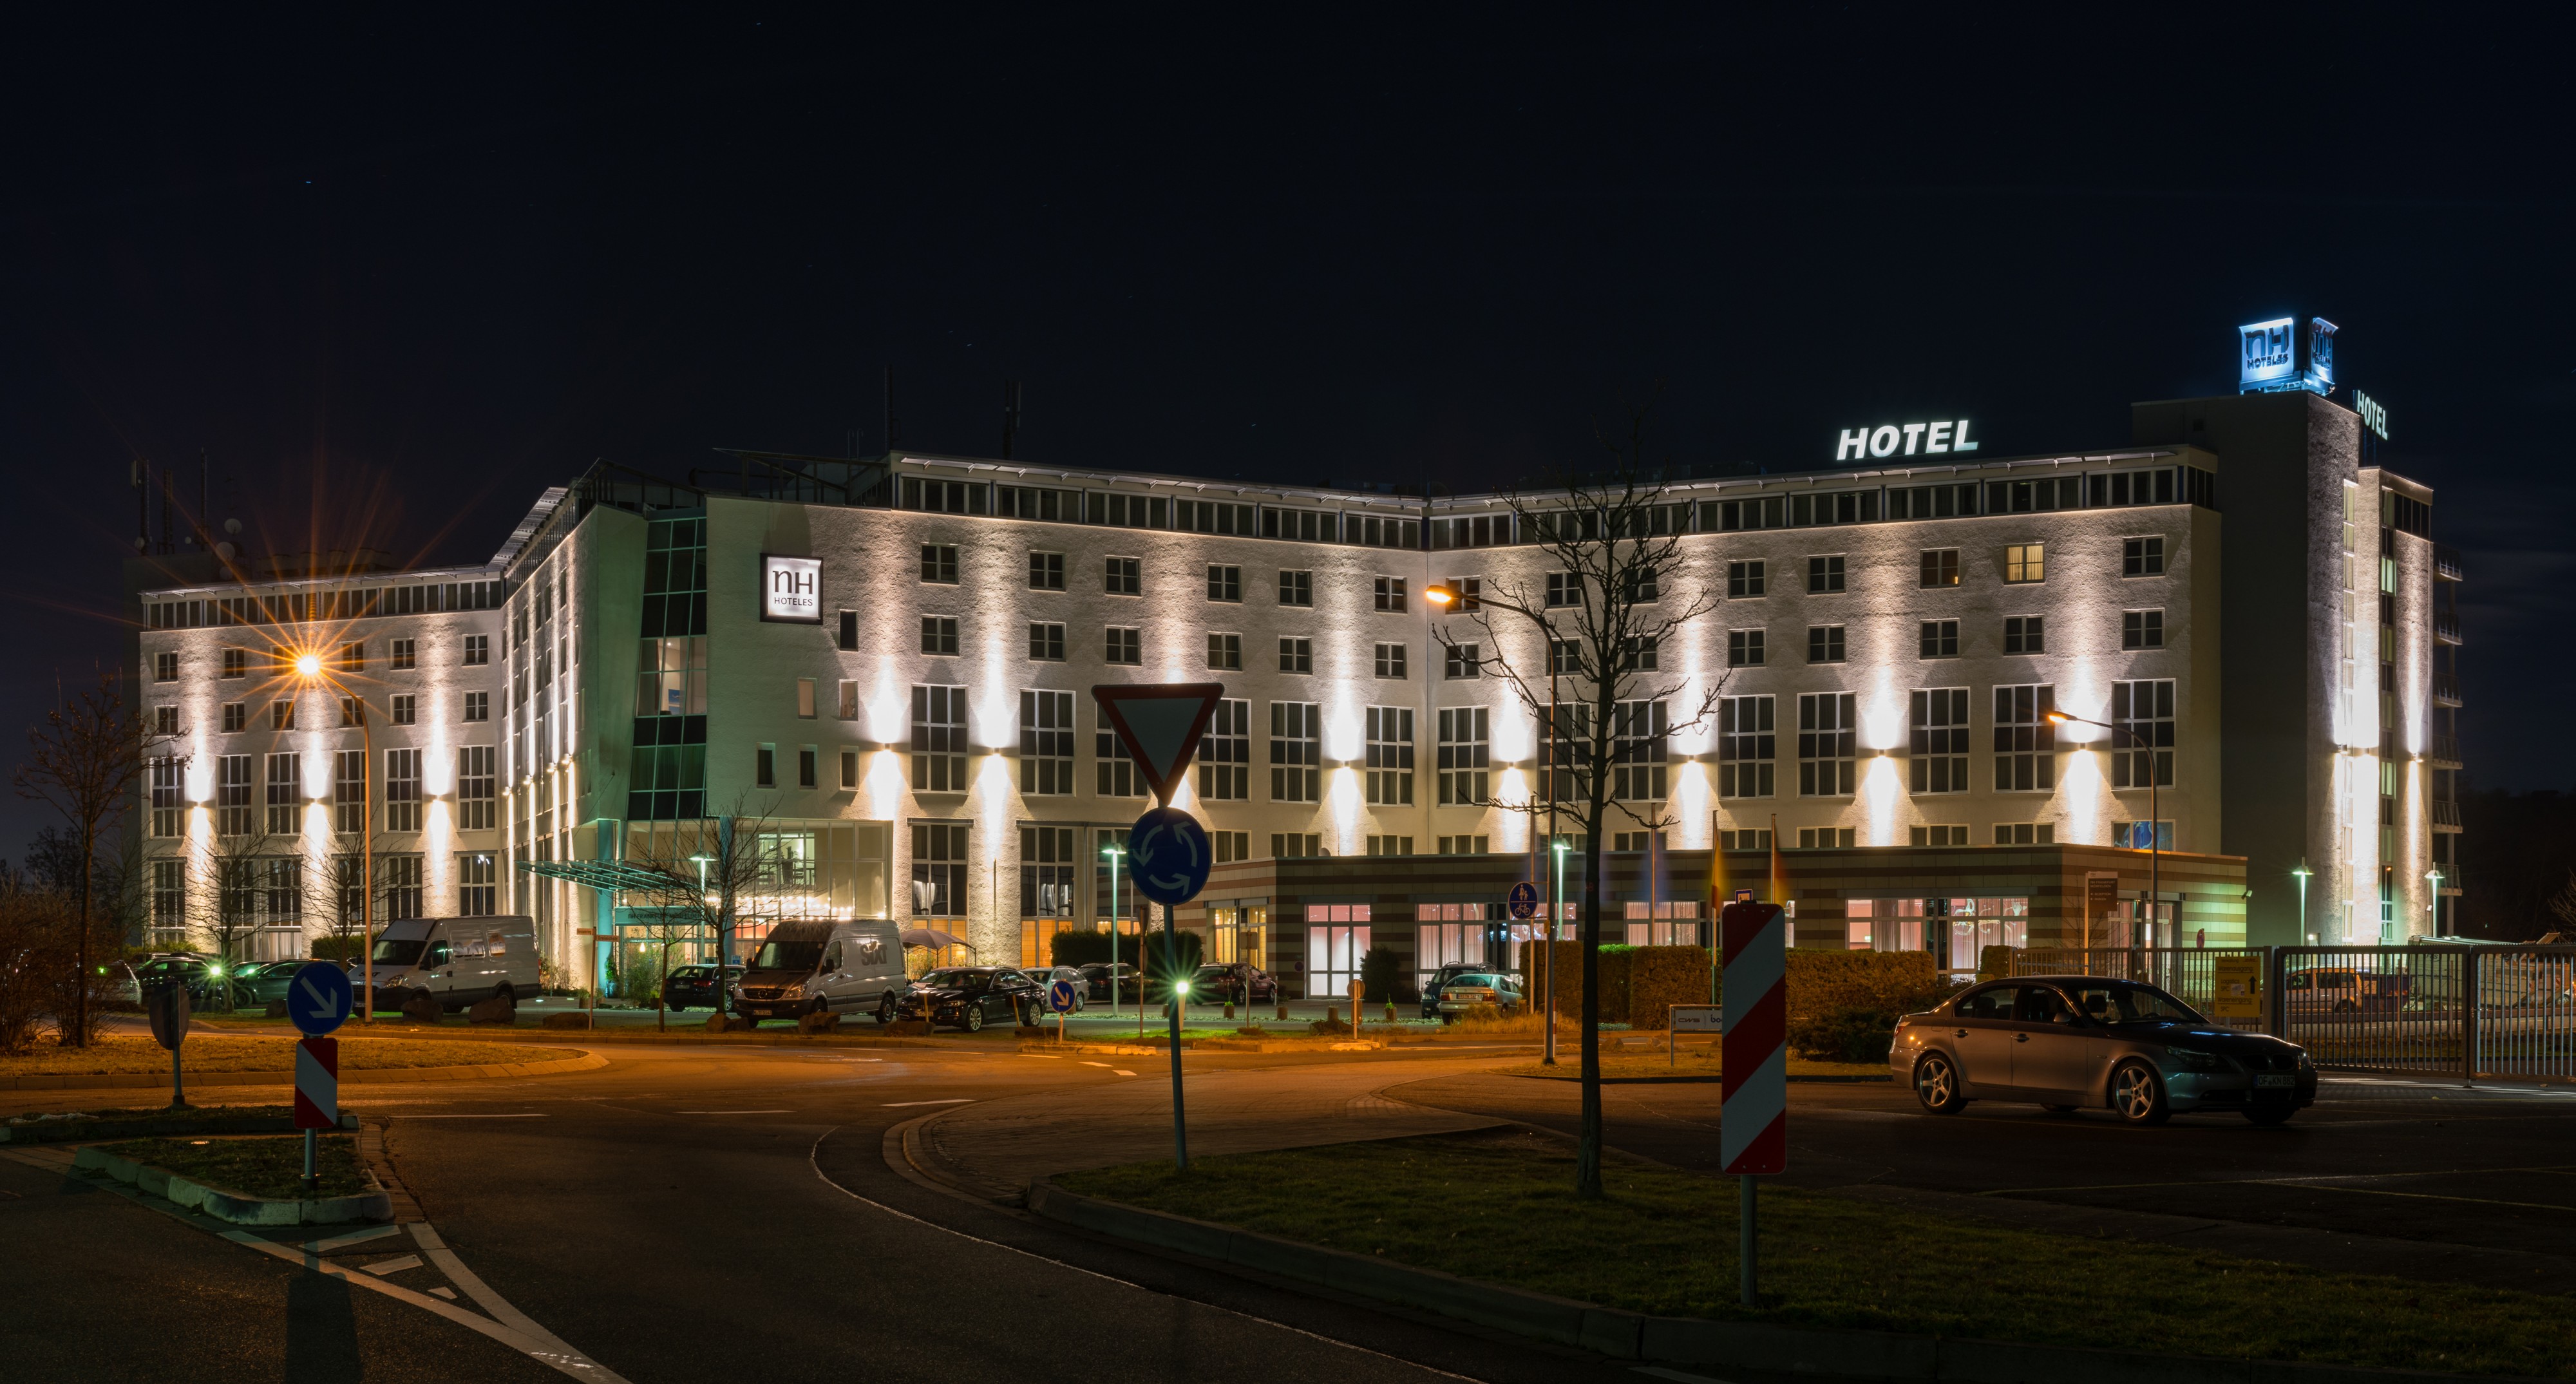 Nh hotel - Mörfelden-Walldor - Hesse - Germany - 02